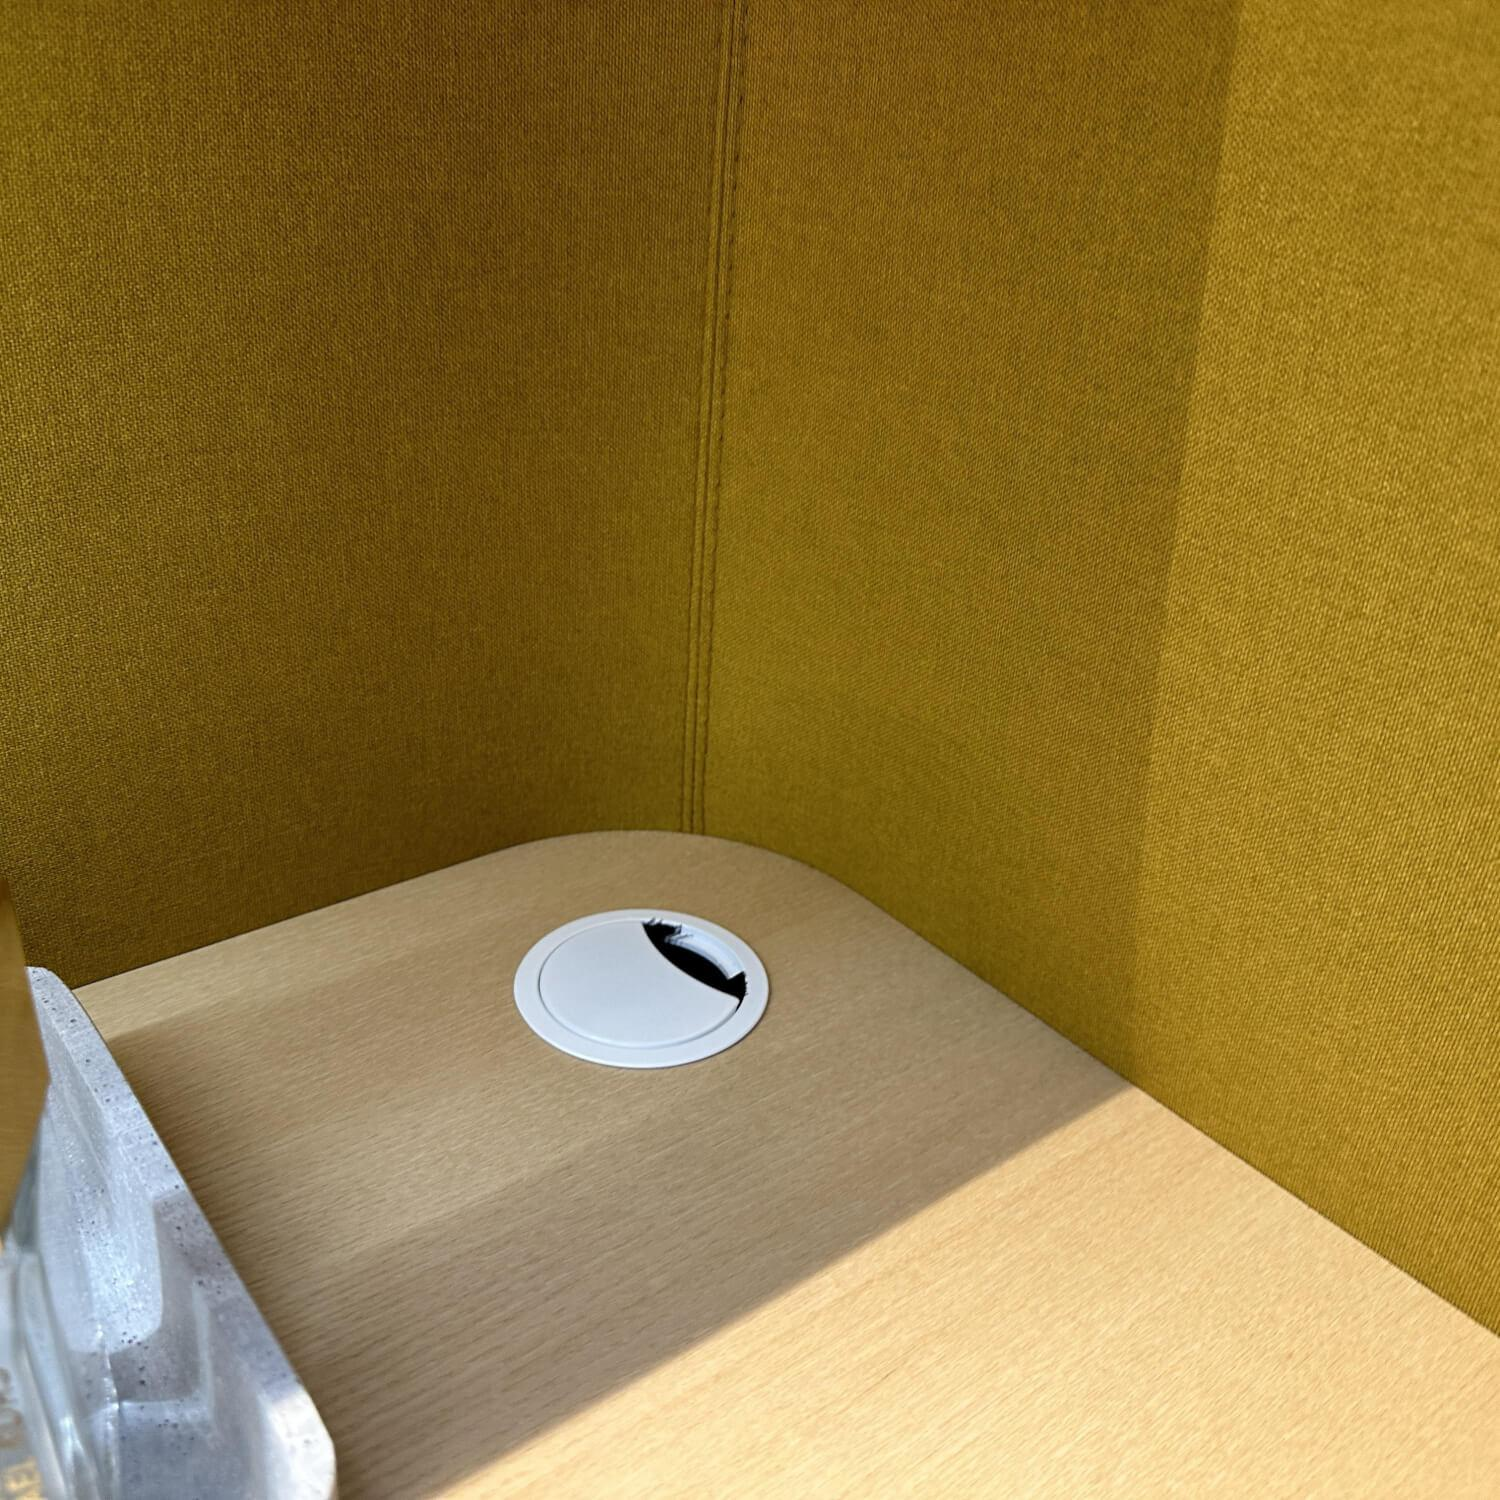 Schreibtisch Floater Bezug Stoff 7204 Curry Platte Esche Furnier Natur Geölt Aufbewahrungslade Weiß Mit Kabeldurchlass